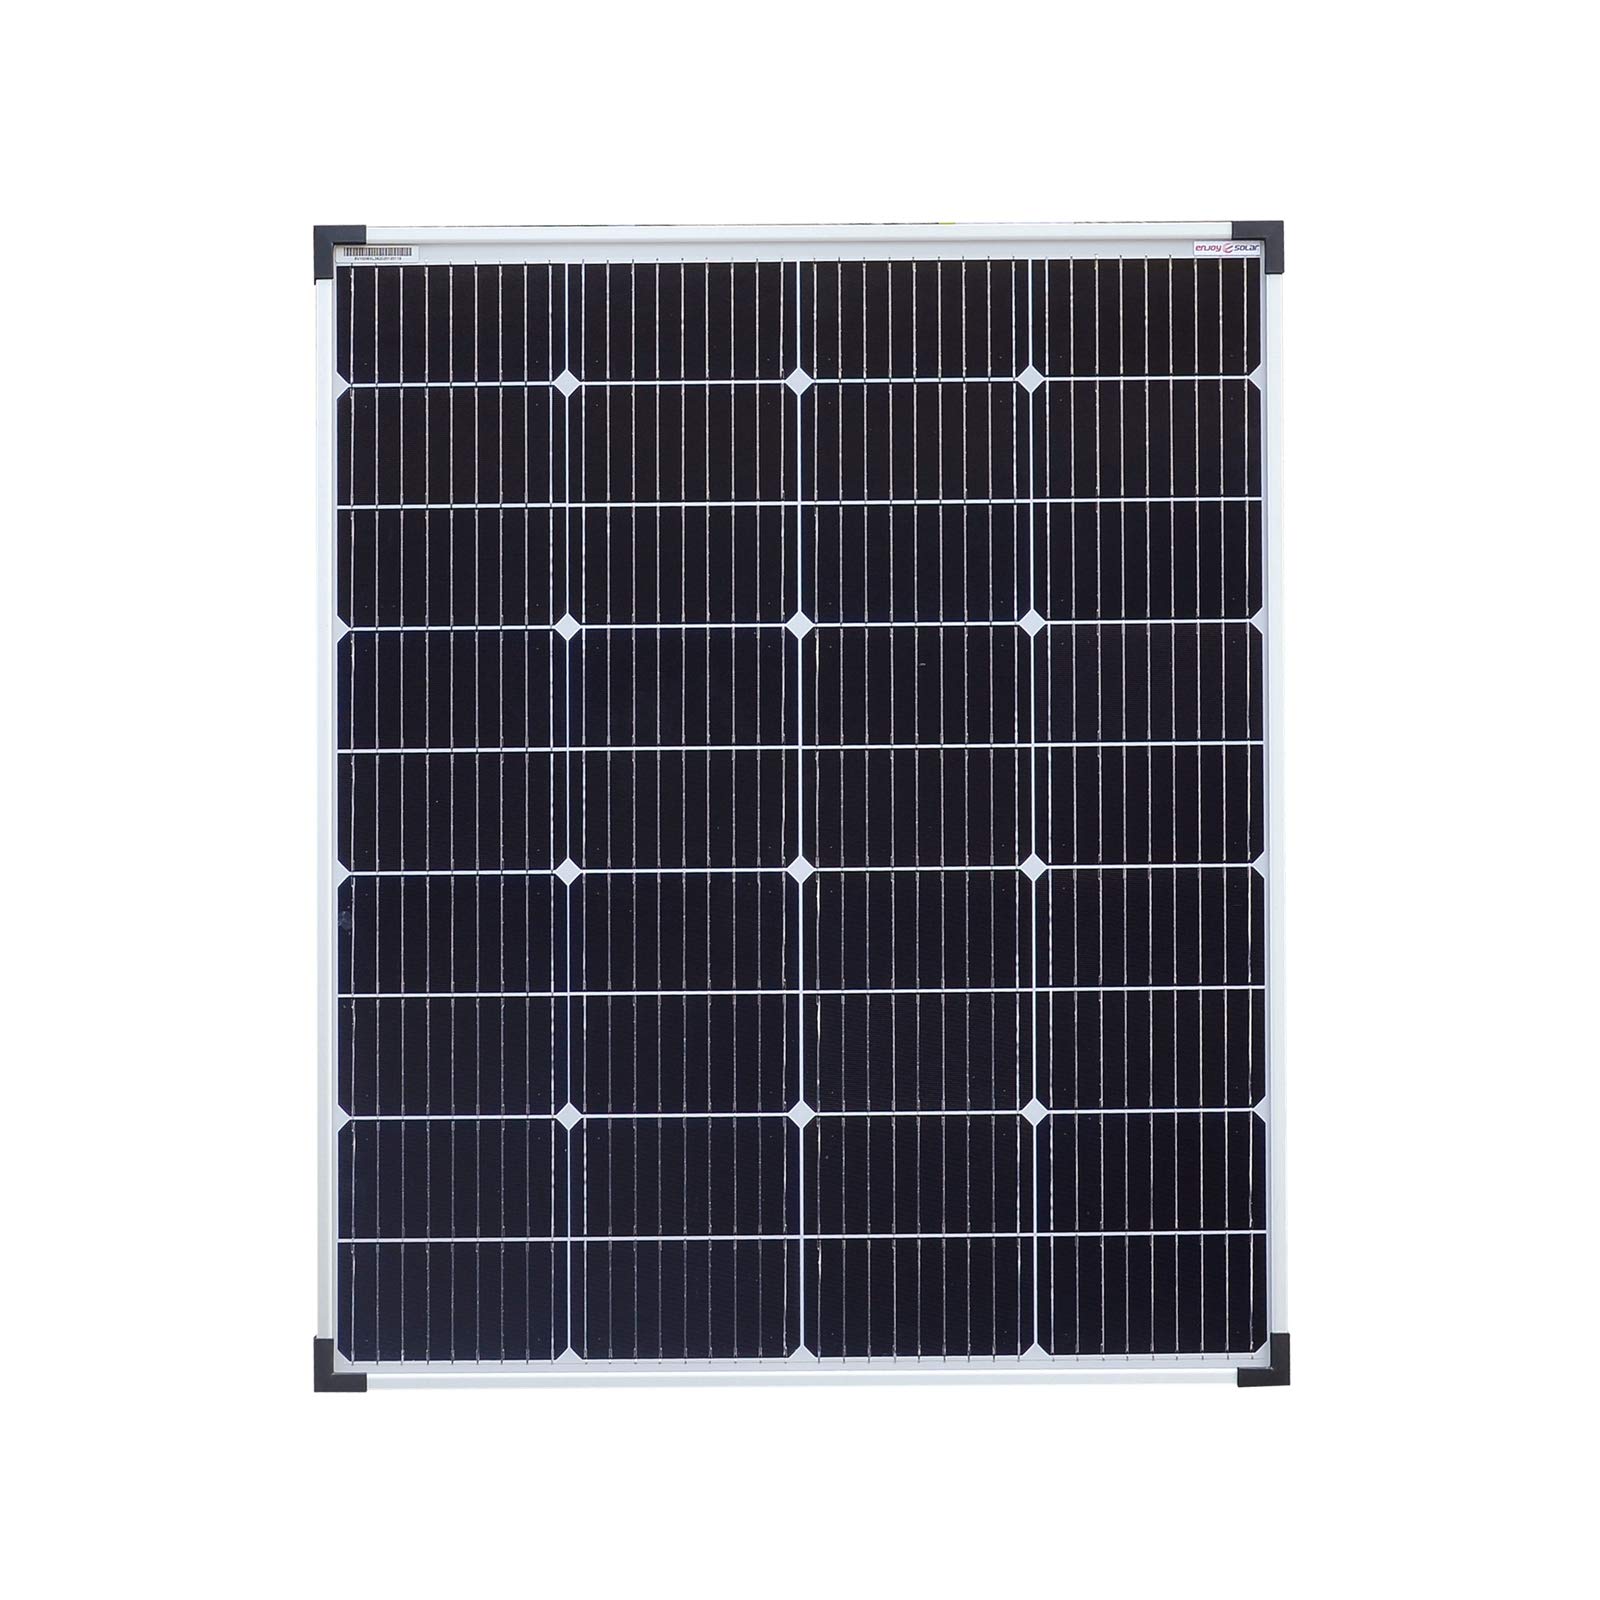 enjoy solar PERC Mono 100W XL 12V Solarpanel Solarmodul Photovoltaikmodul, 166mm*166mm Monokristalline Solarzelle mit 9 Busbars, ideal für Wohnmobil, Gartenhäuse, Boot